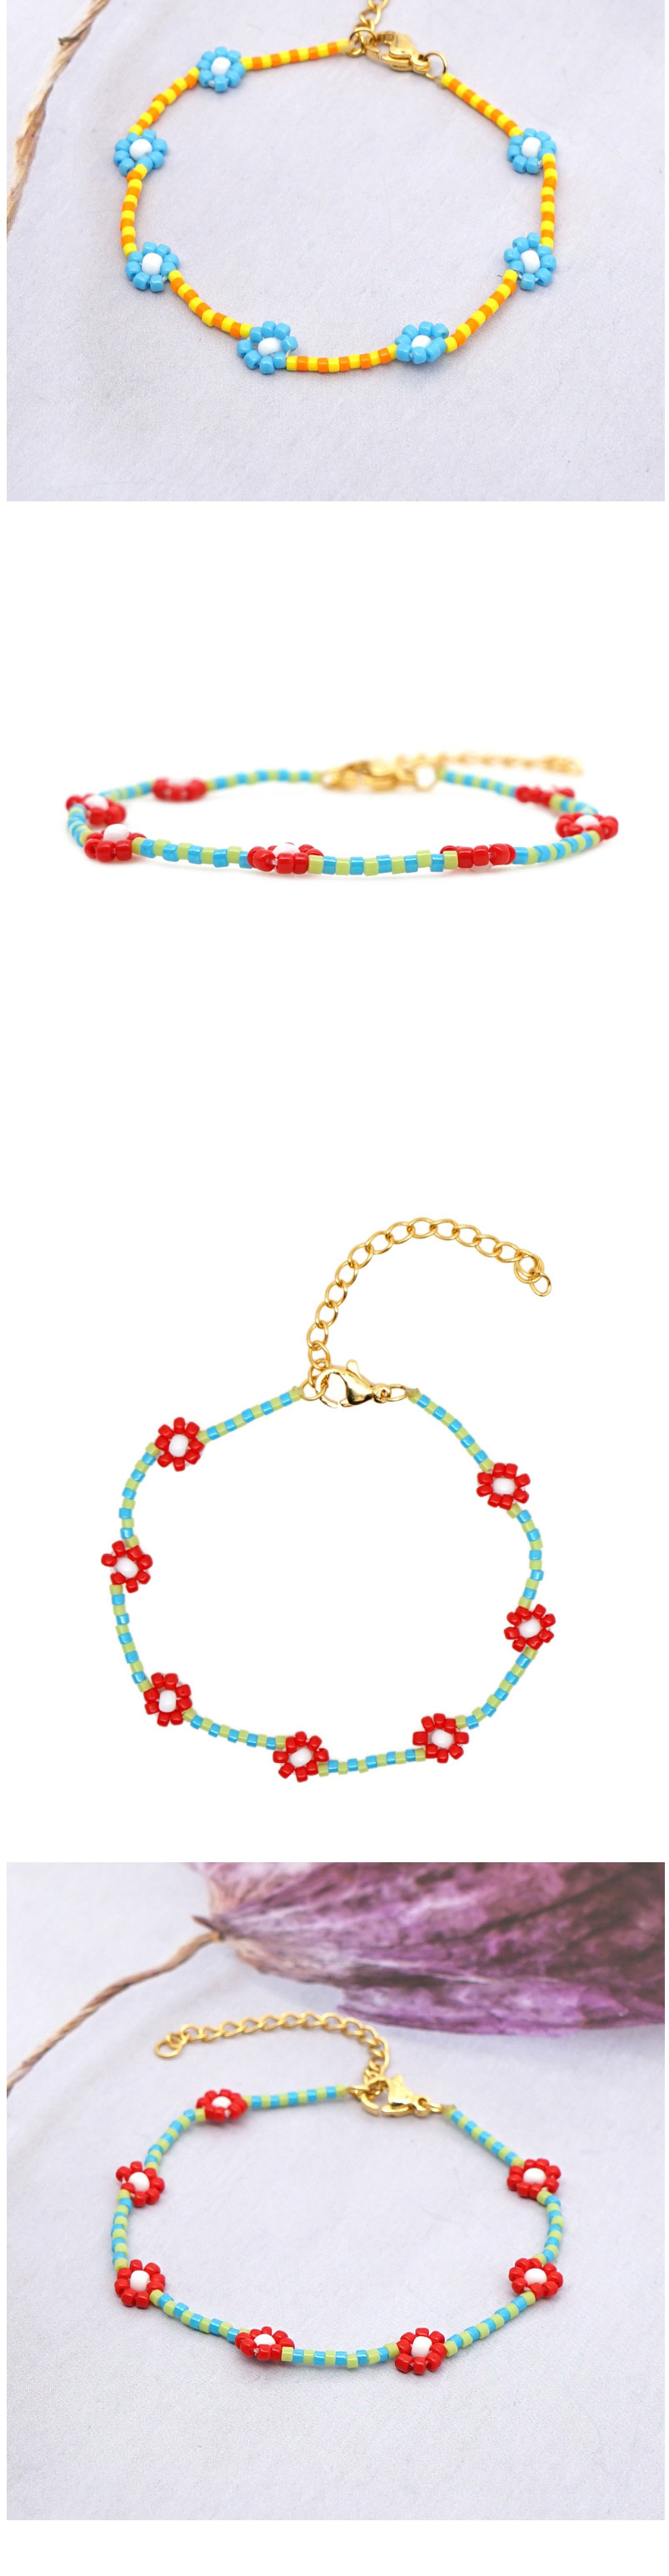 Fashion Yellow + Blue Imported Rice Beads Hand-woven Flower Bracelet,Beaded Bracelet